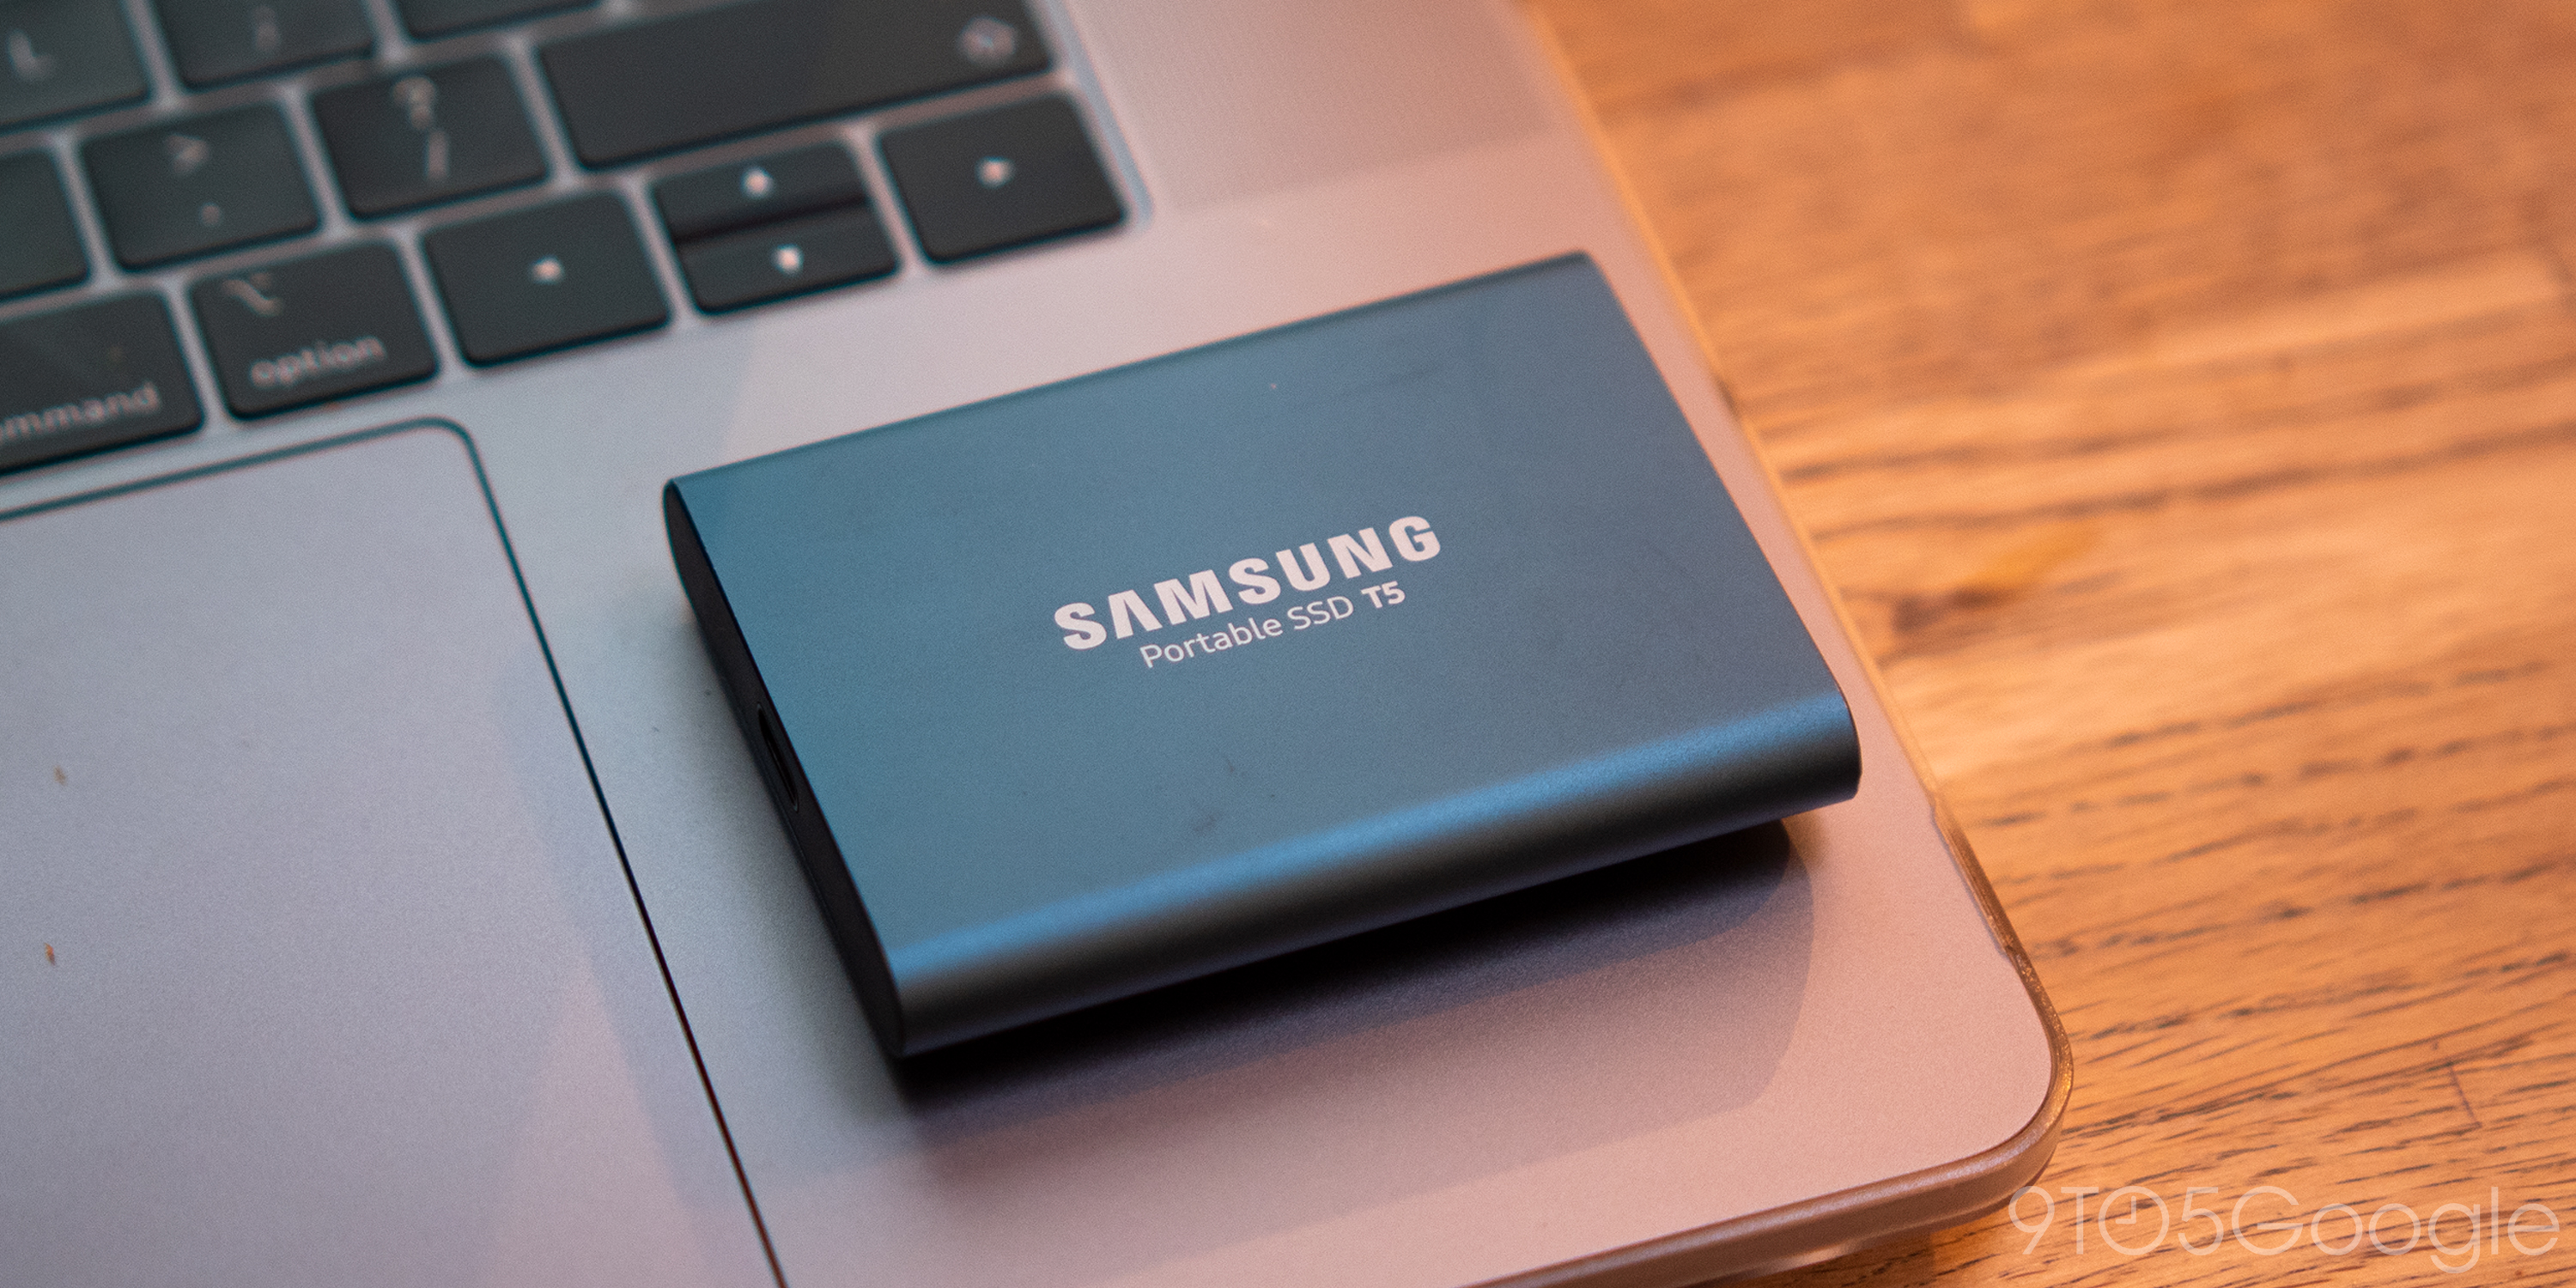 Samsung T5 SSD - digital nomad gifts